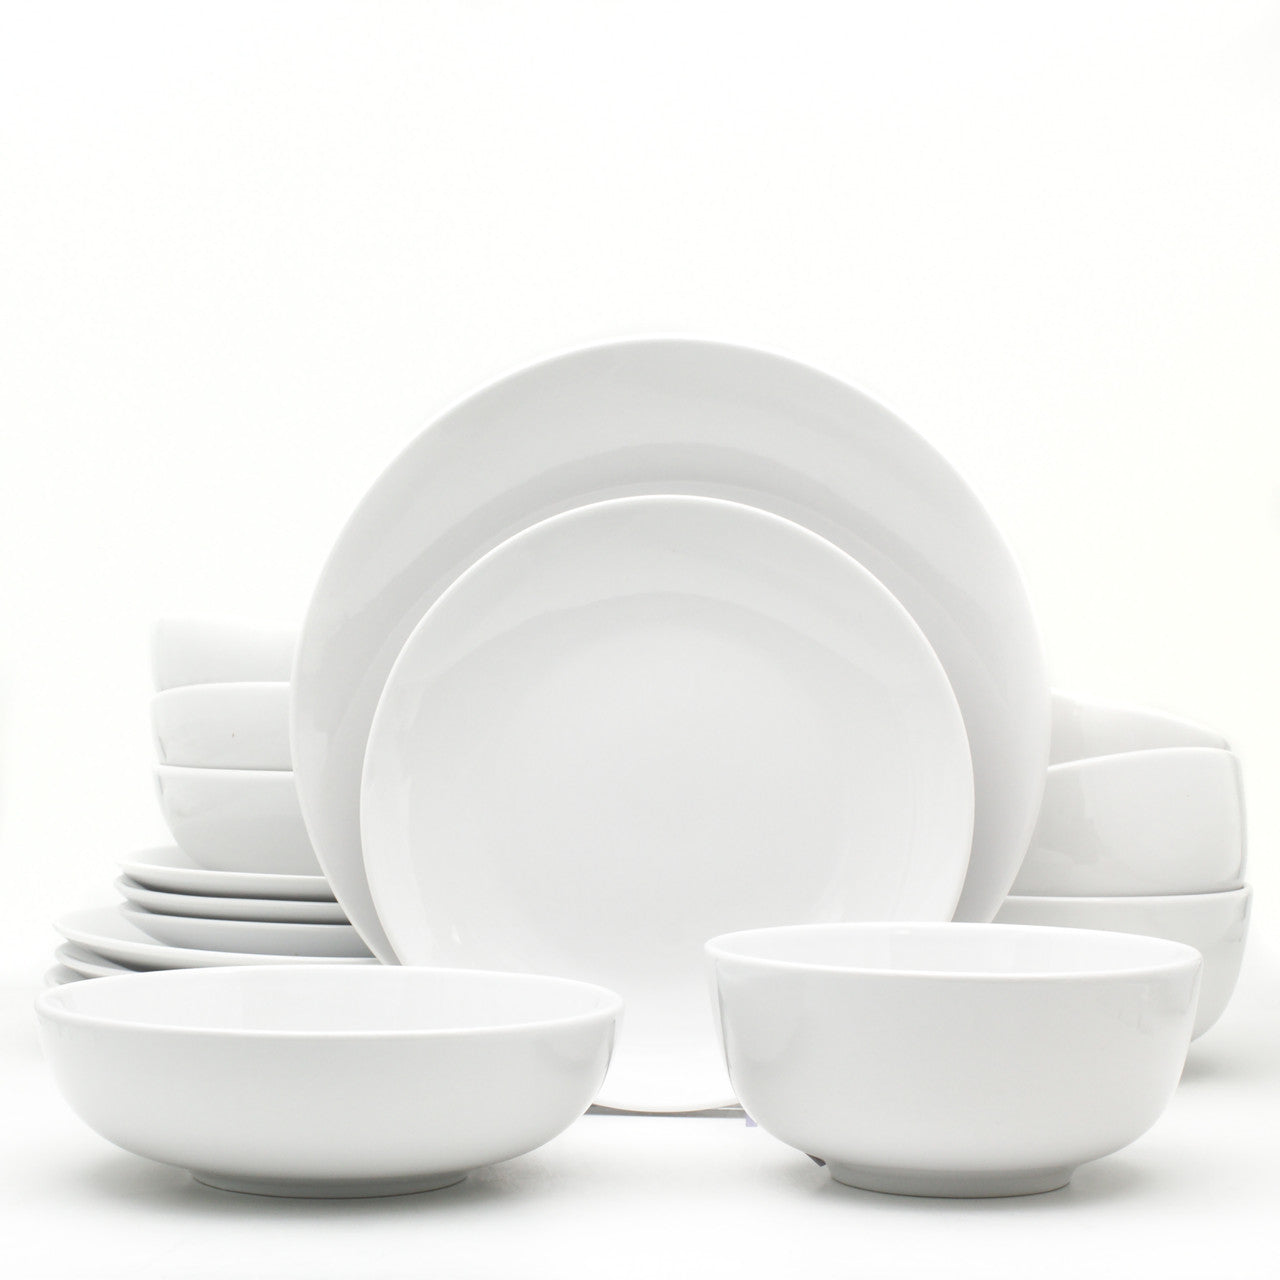 White Essential 16 Piece Double Bowl Dinnerware Set, Service for 4 - Euro Ceramica 